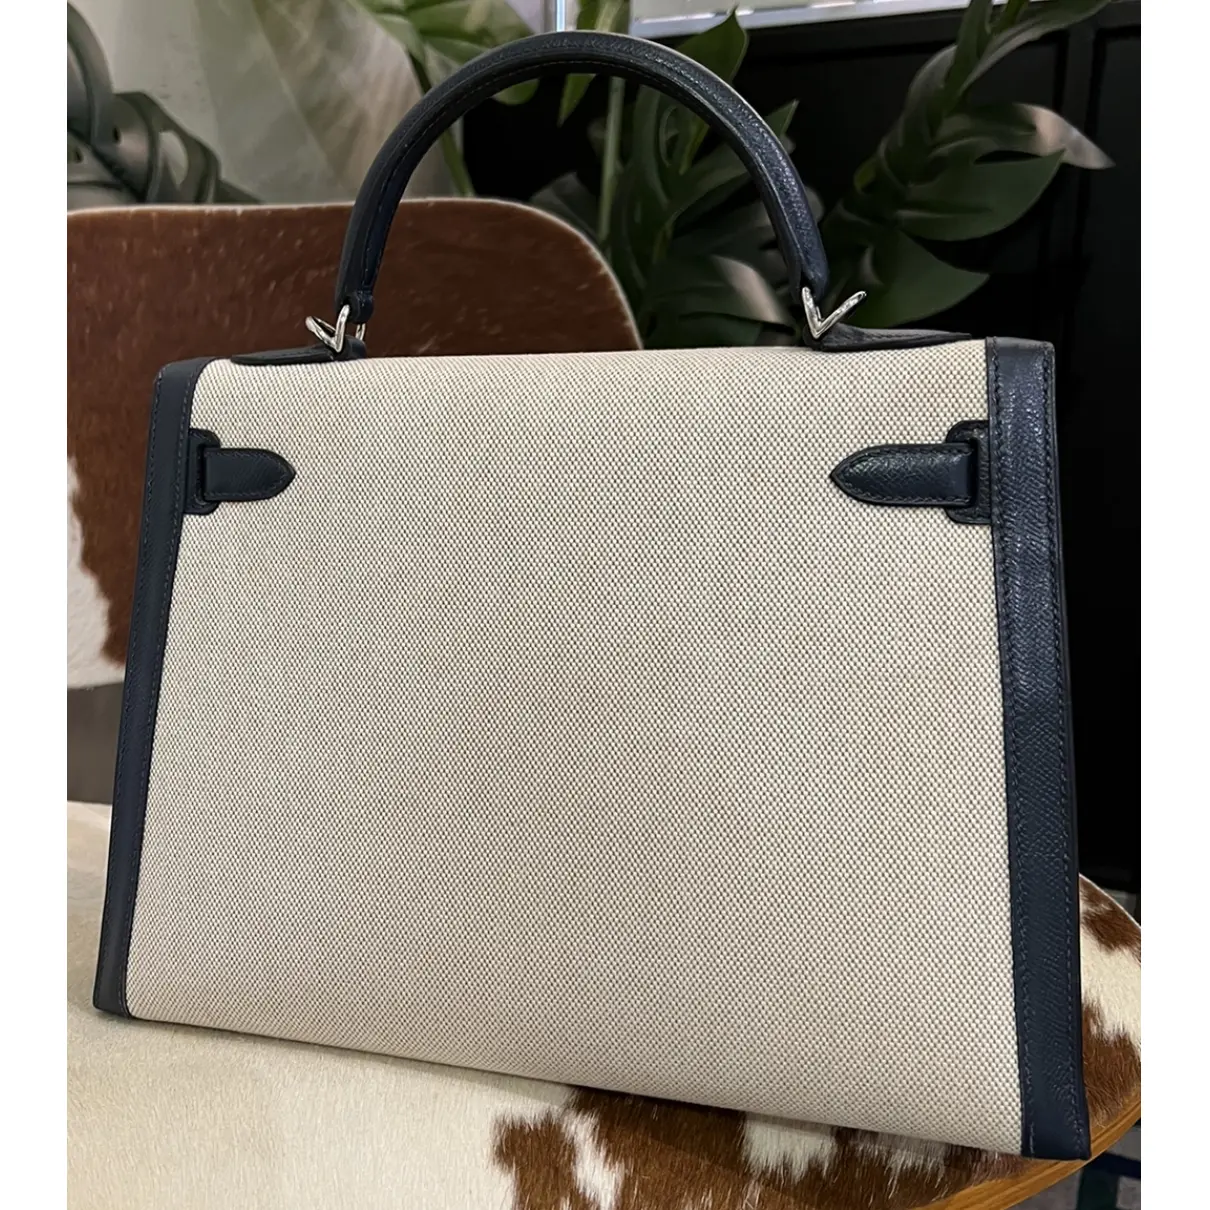 Buy Hermès Kelly 32 cloth handbag online